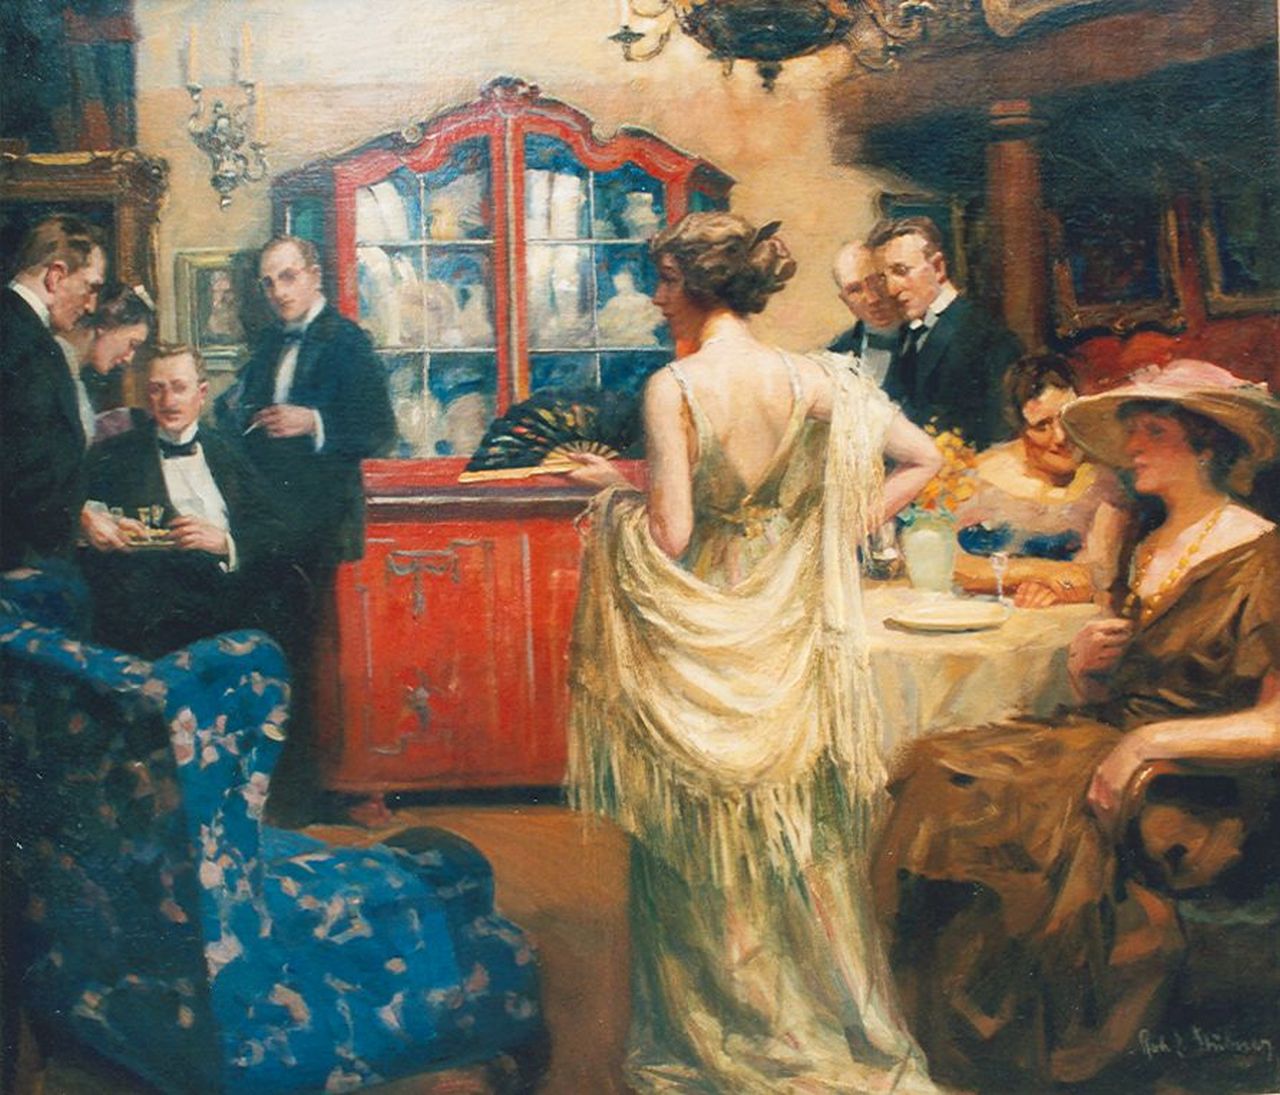 Stübner R.E.  | Robert Emil Stübner, Cocktail Party, oil on canvas 120.0 x 140.0 cm, signed l.r.